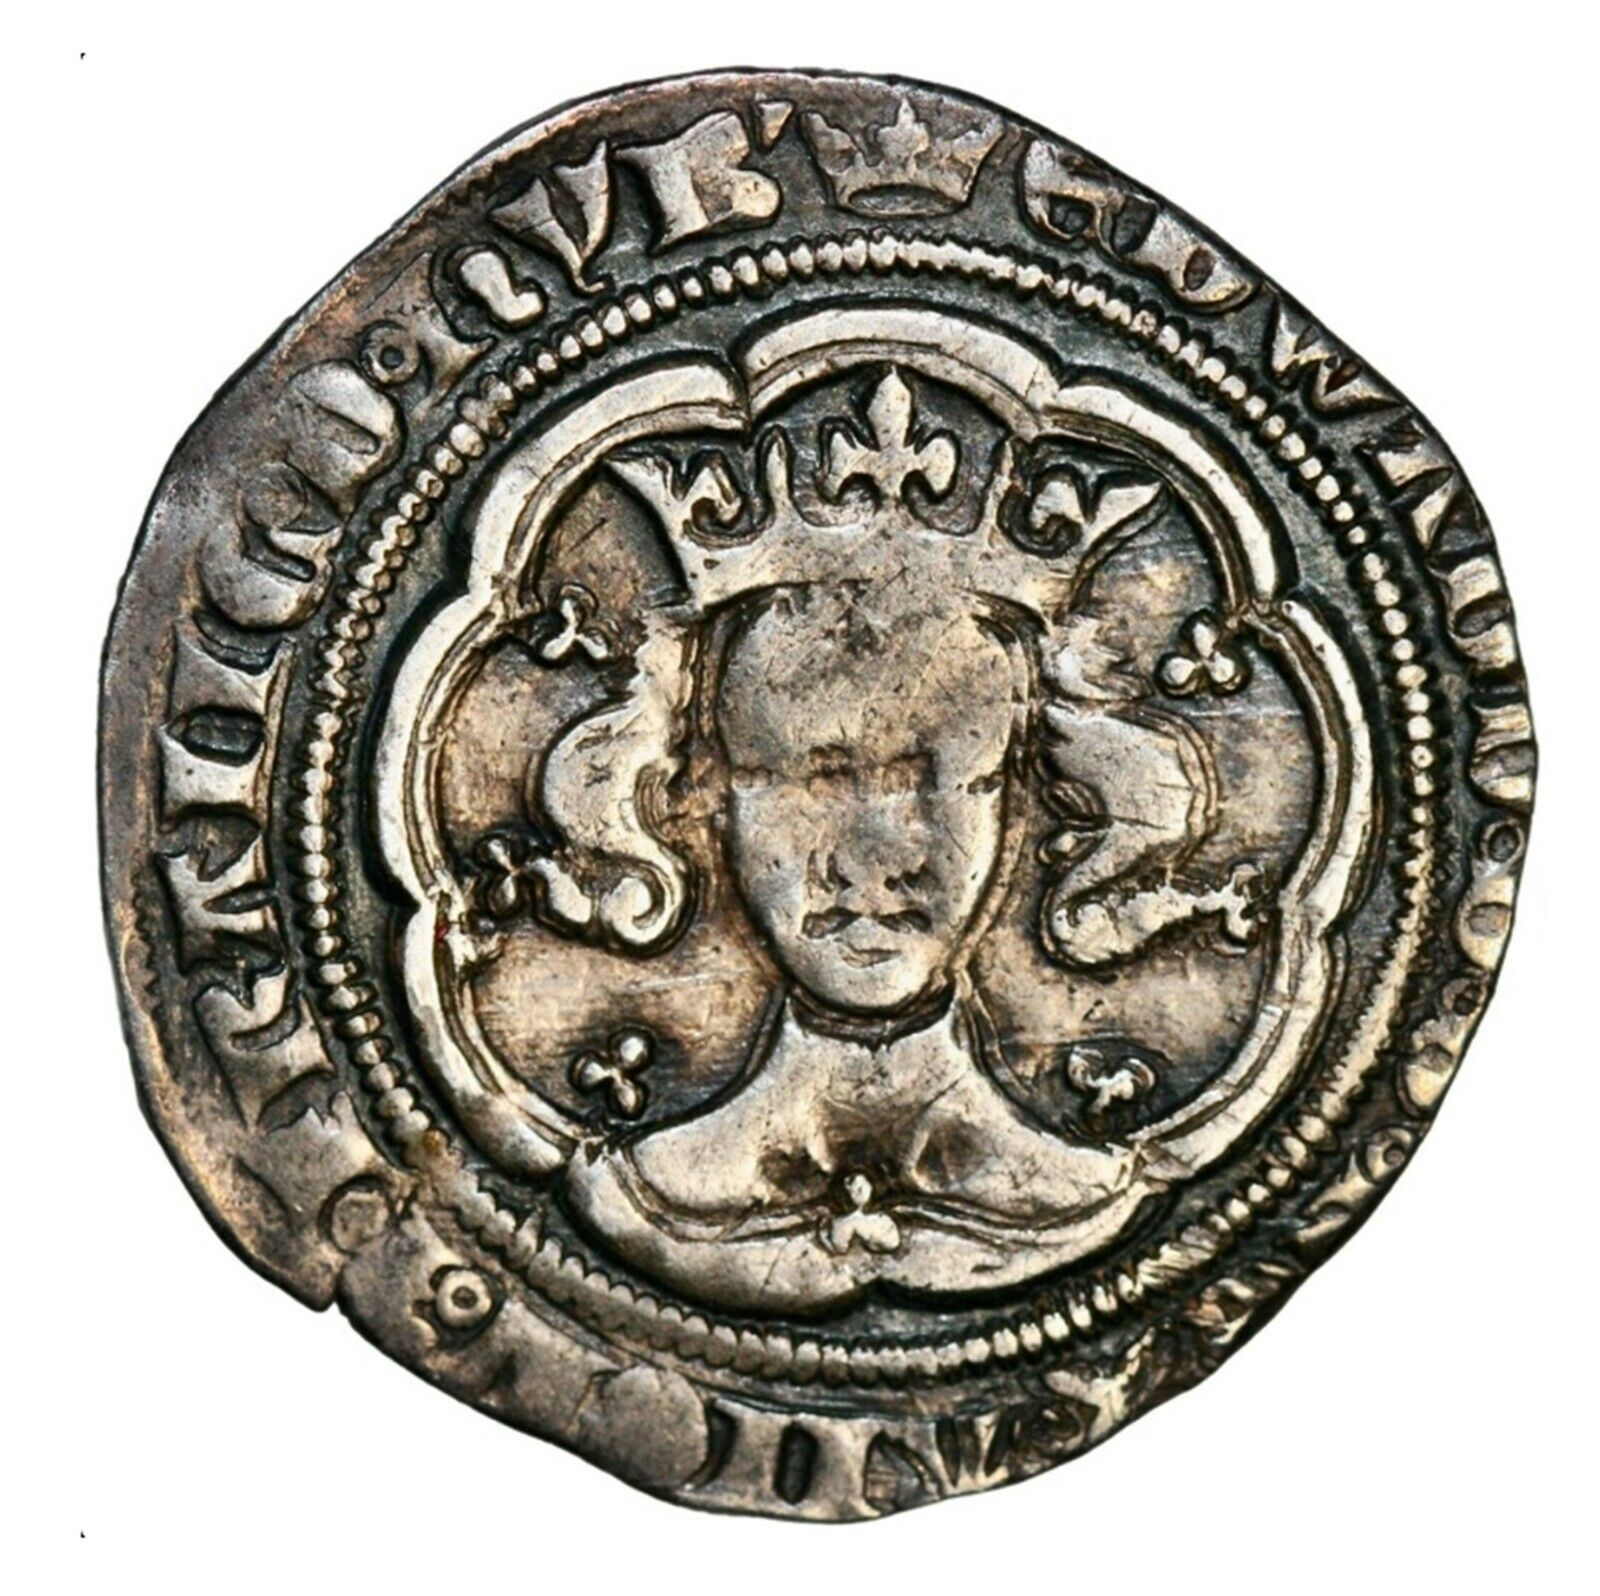 1356 Ad  Medieval Silver Groat King Edward Iii London Series F Poitiers Battle